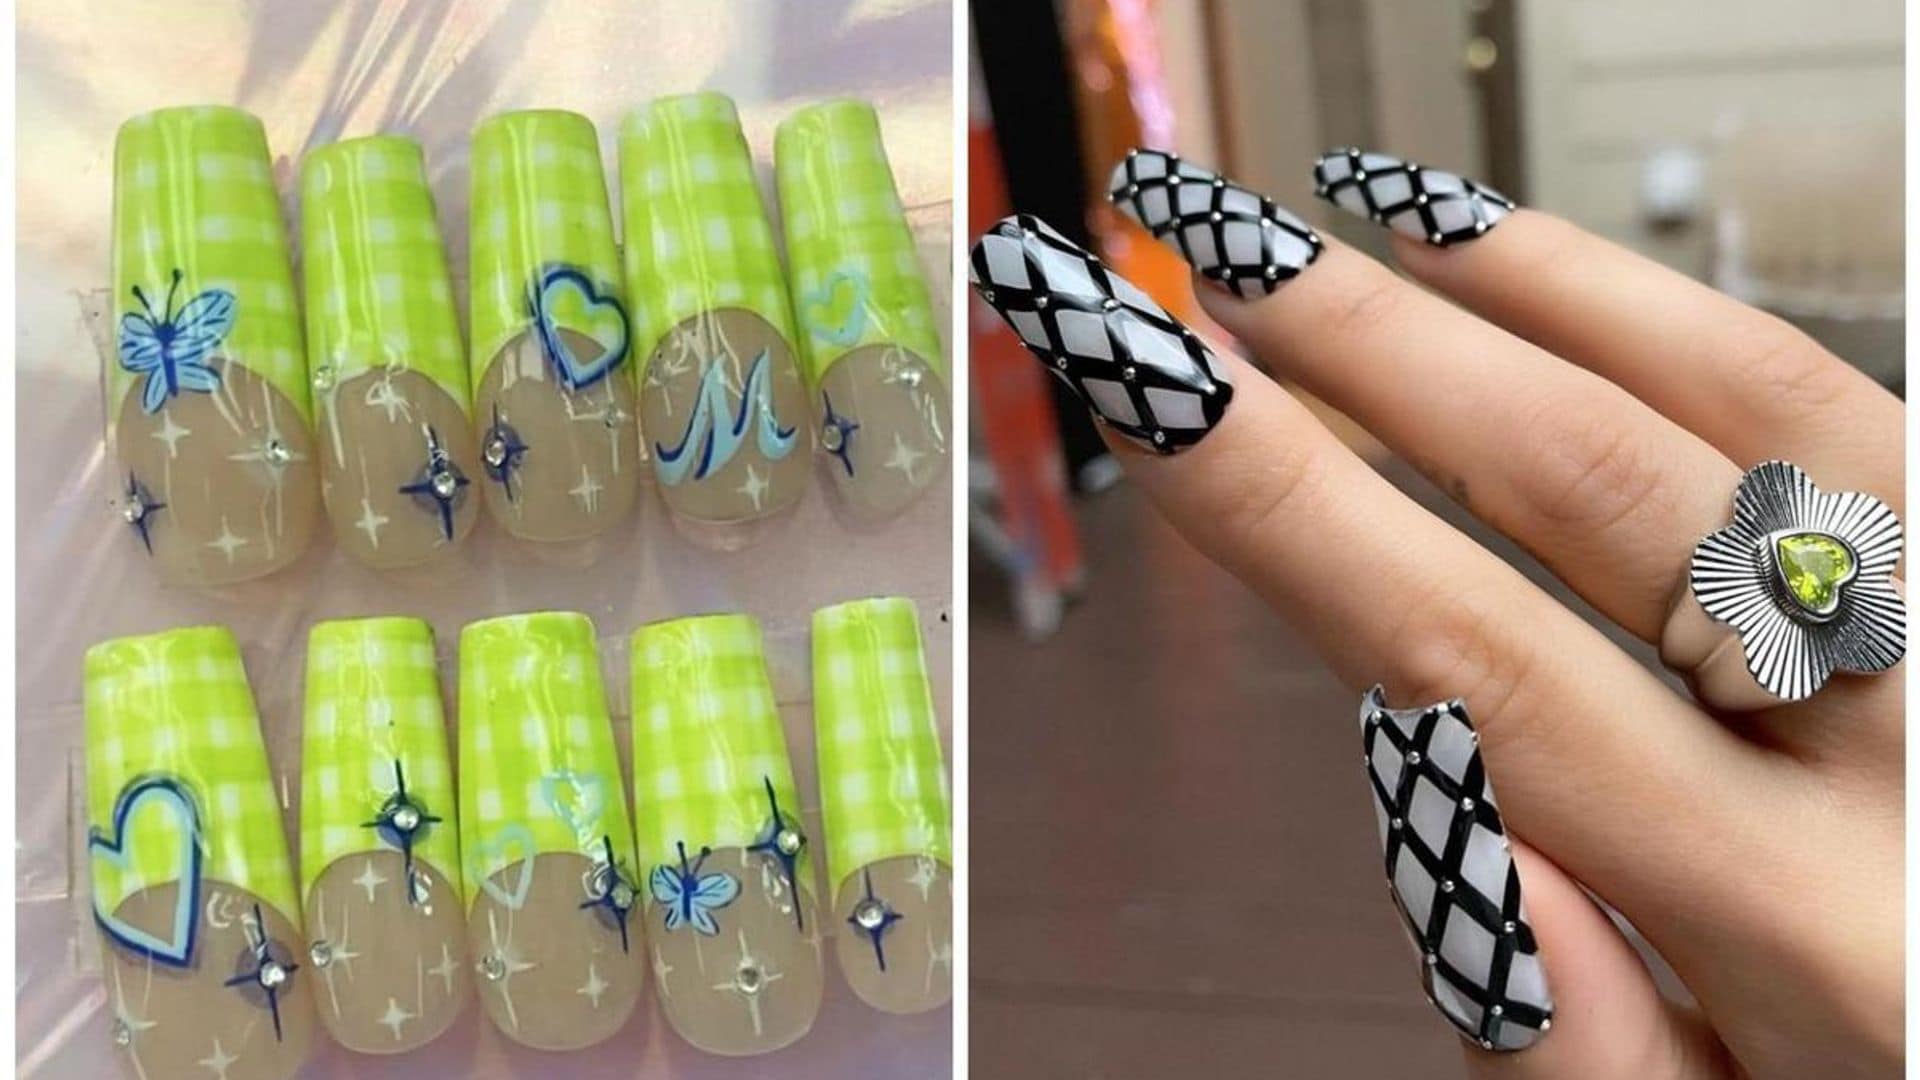 Euphoria's viral nail-art designs